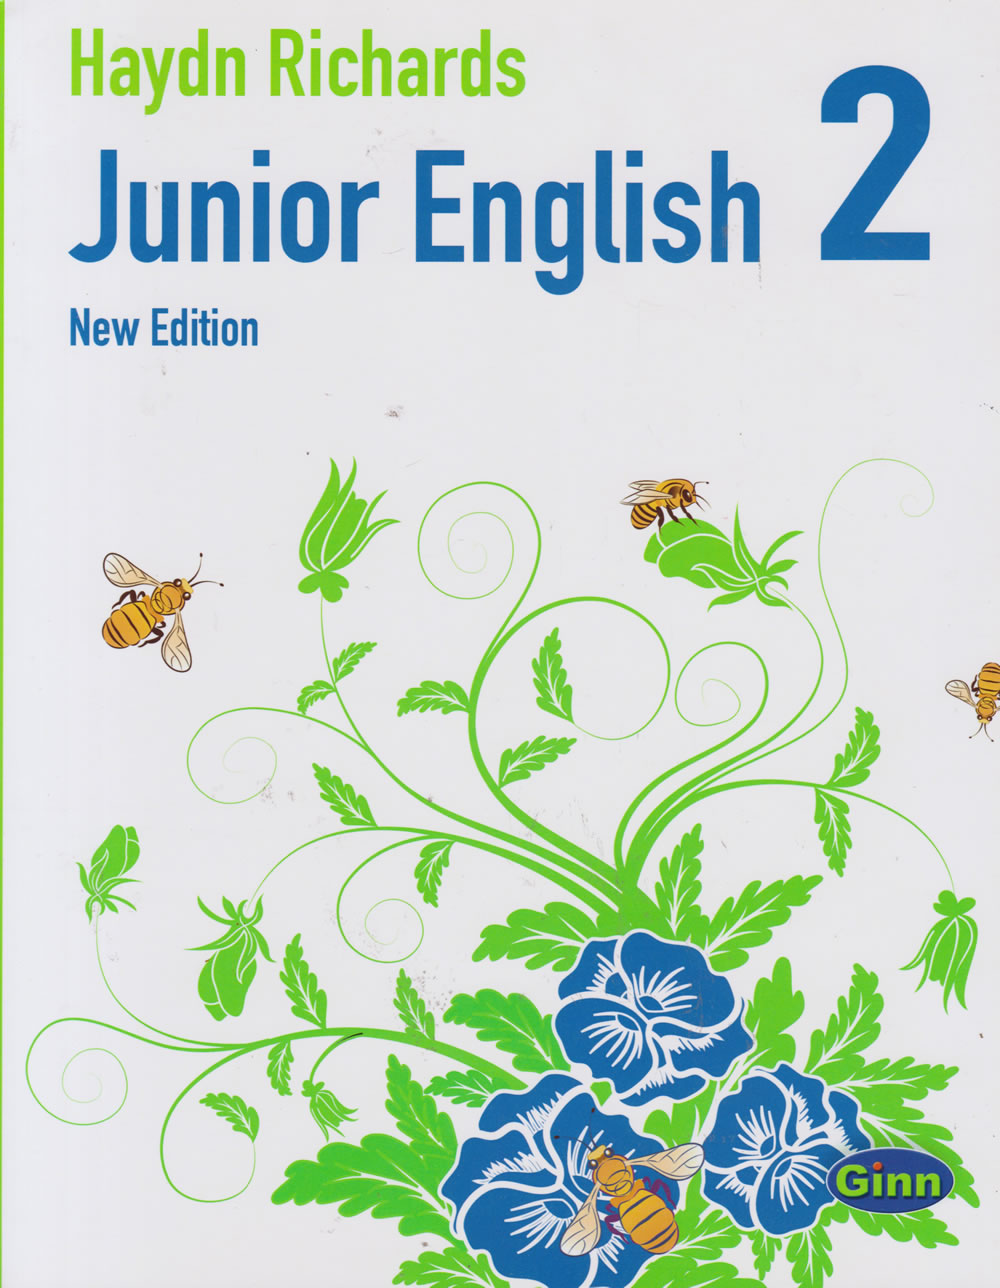 Junior English Book 4 Answers